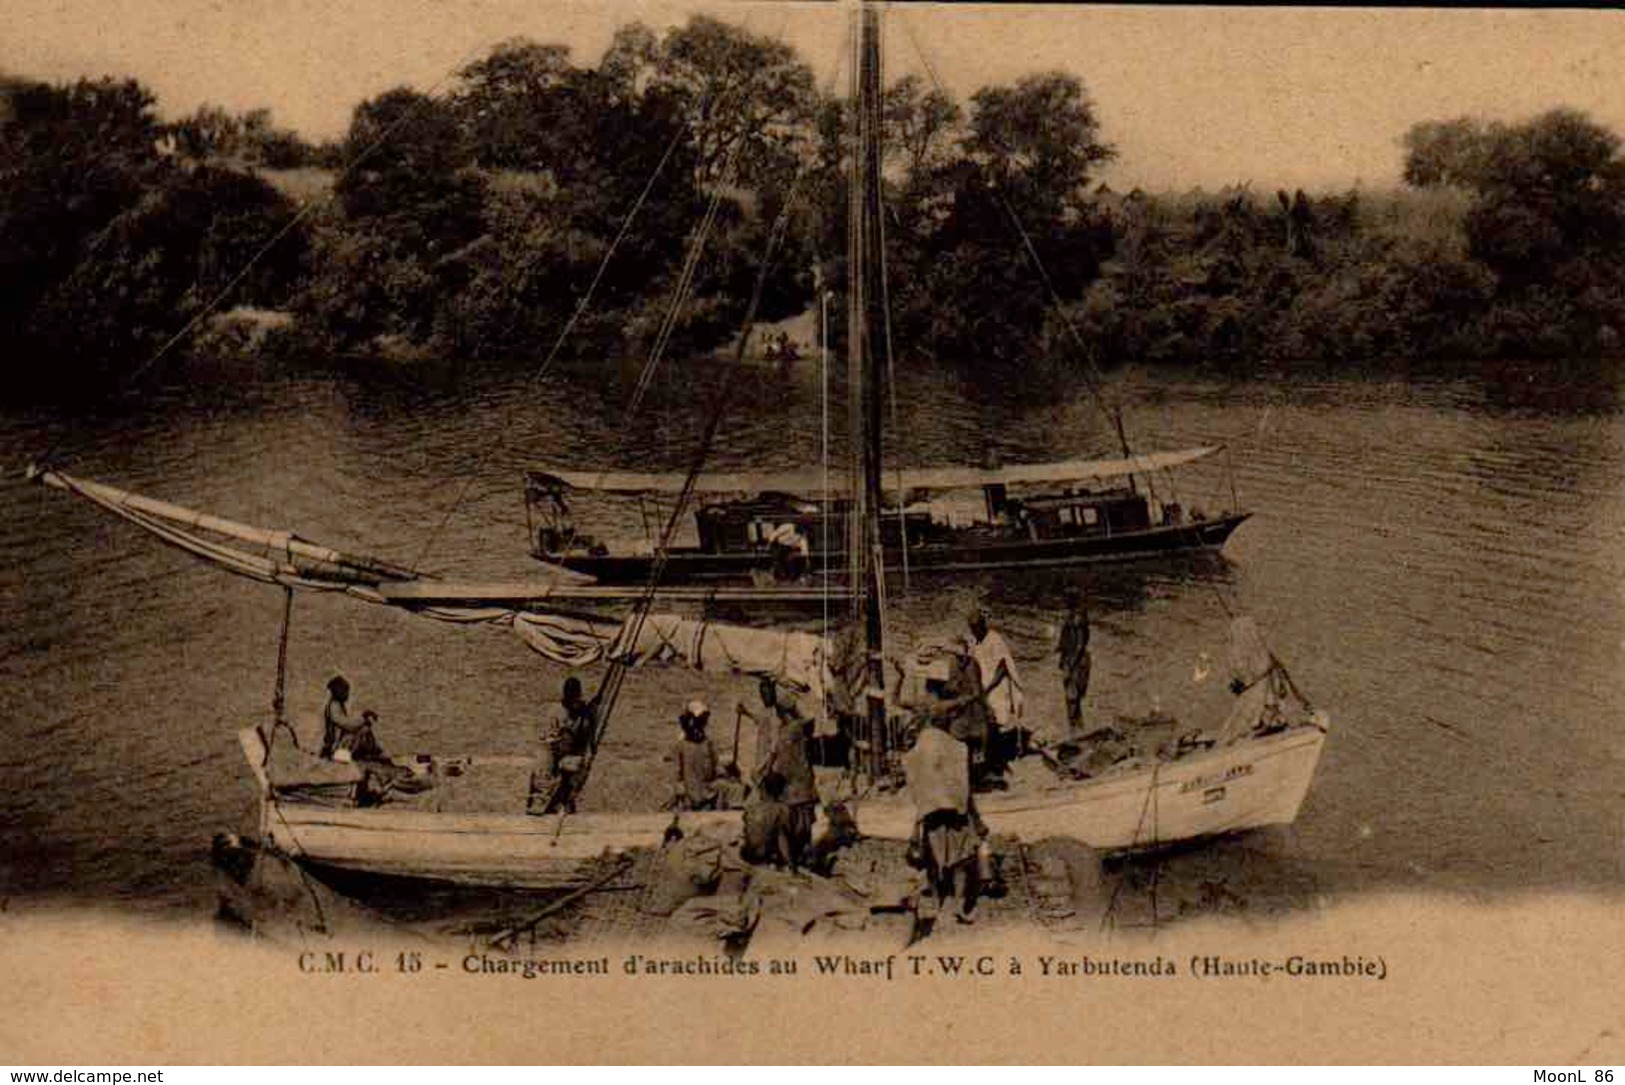 GAMBIE - Ancienne AFRIQUE OCCIDENTALE - CHARGEMENT D ARACHIDES AU WHARF T.W.C. A YARBUTENDA - Gambia